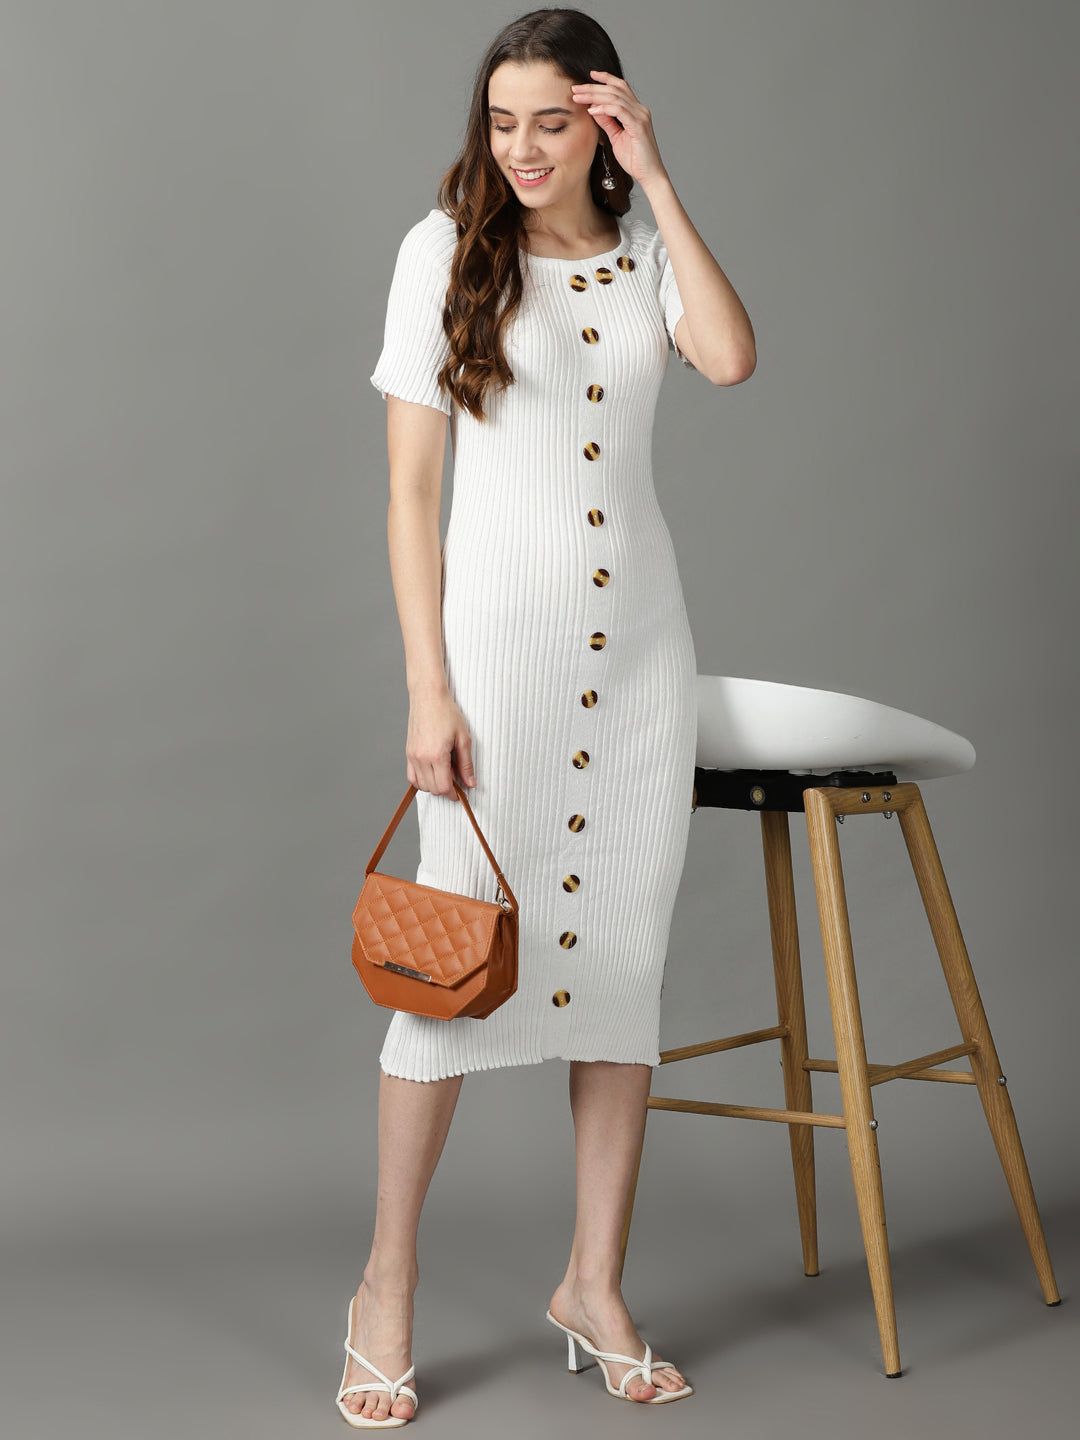 Women's White Solid Bodycon Dress